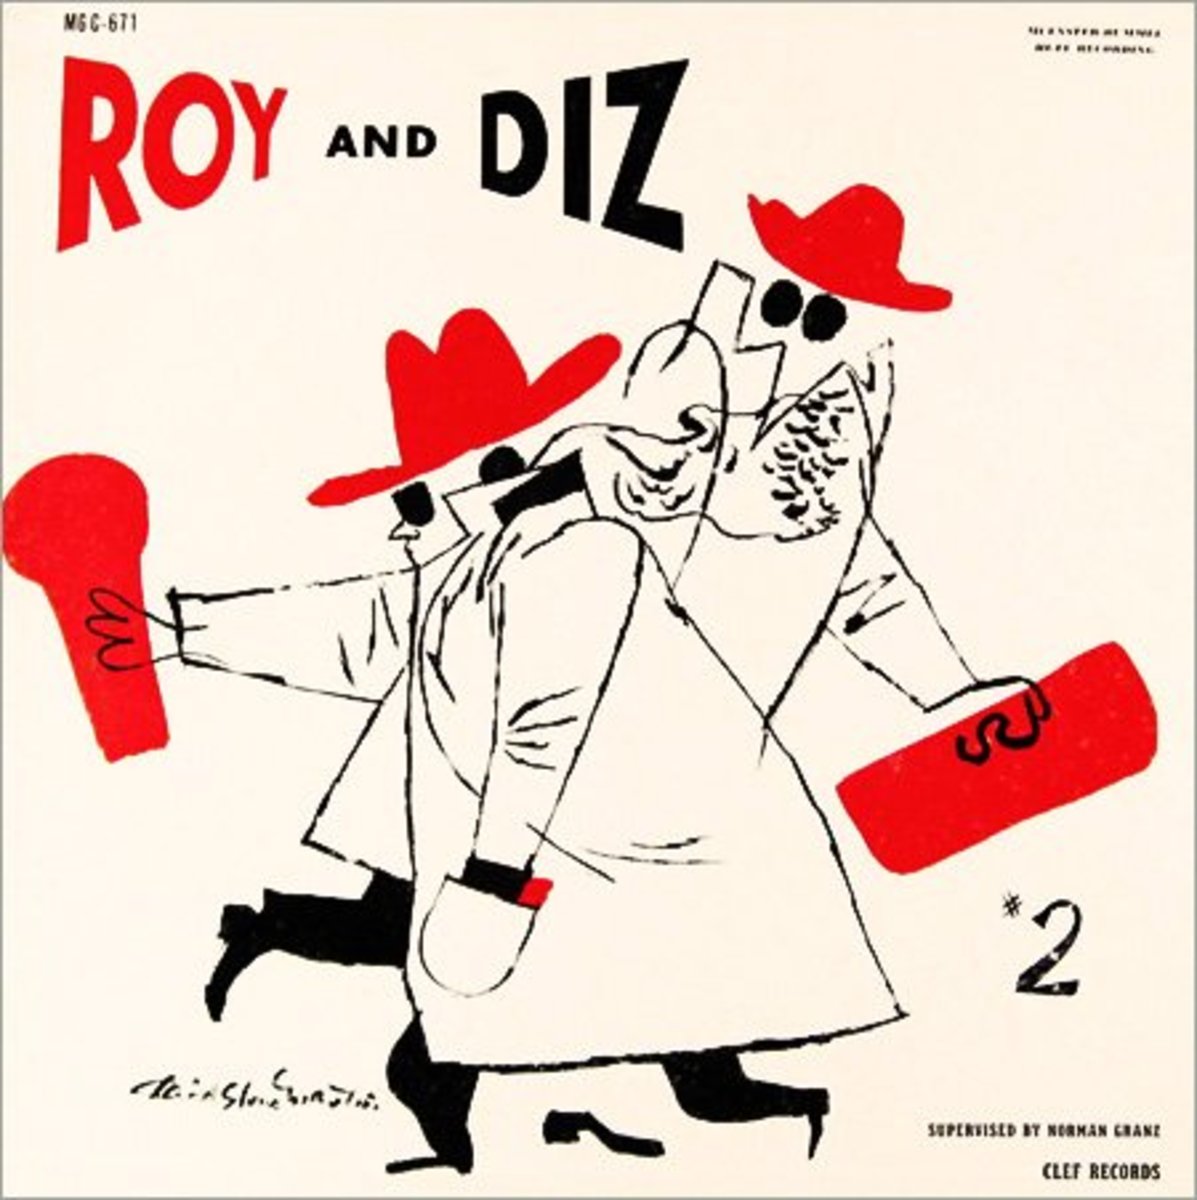 Roy Eldridge Dizzy Gillespie "Roy and Diz," Clef Records MG C 671 12" LP Vinyl Record (1955). Album cover art by David Stone Martin.